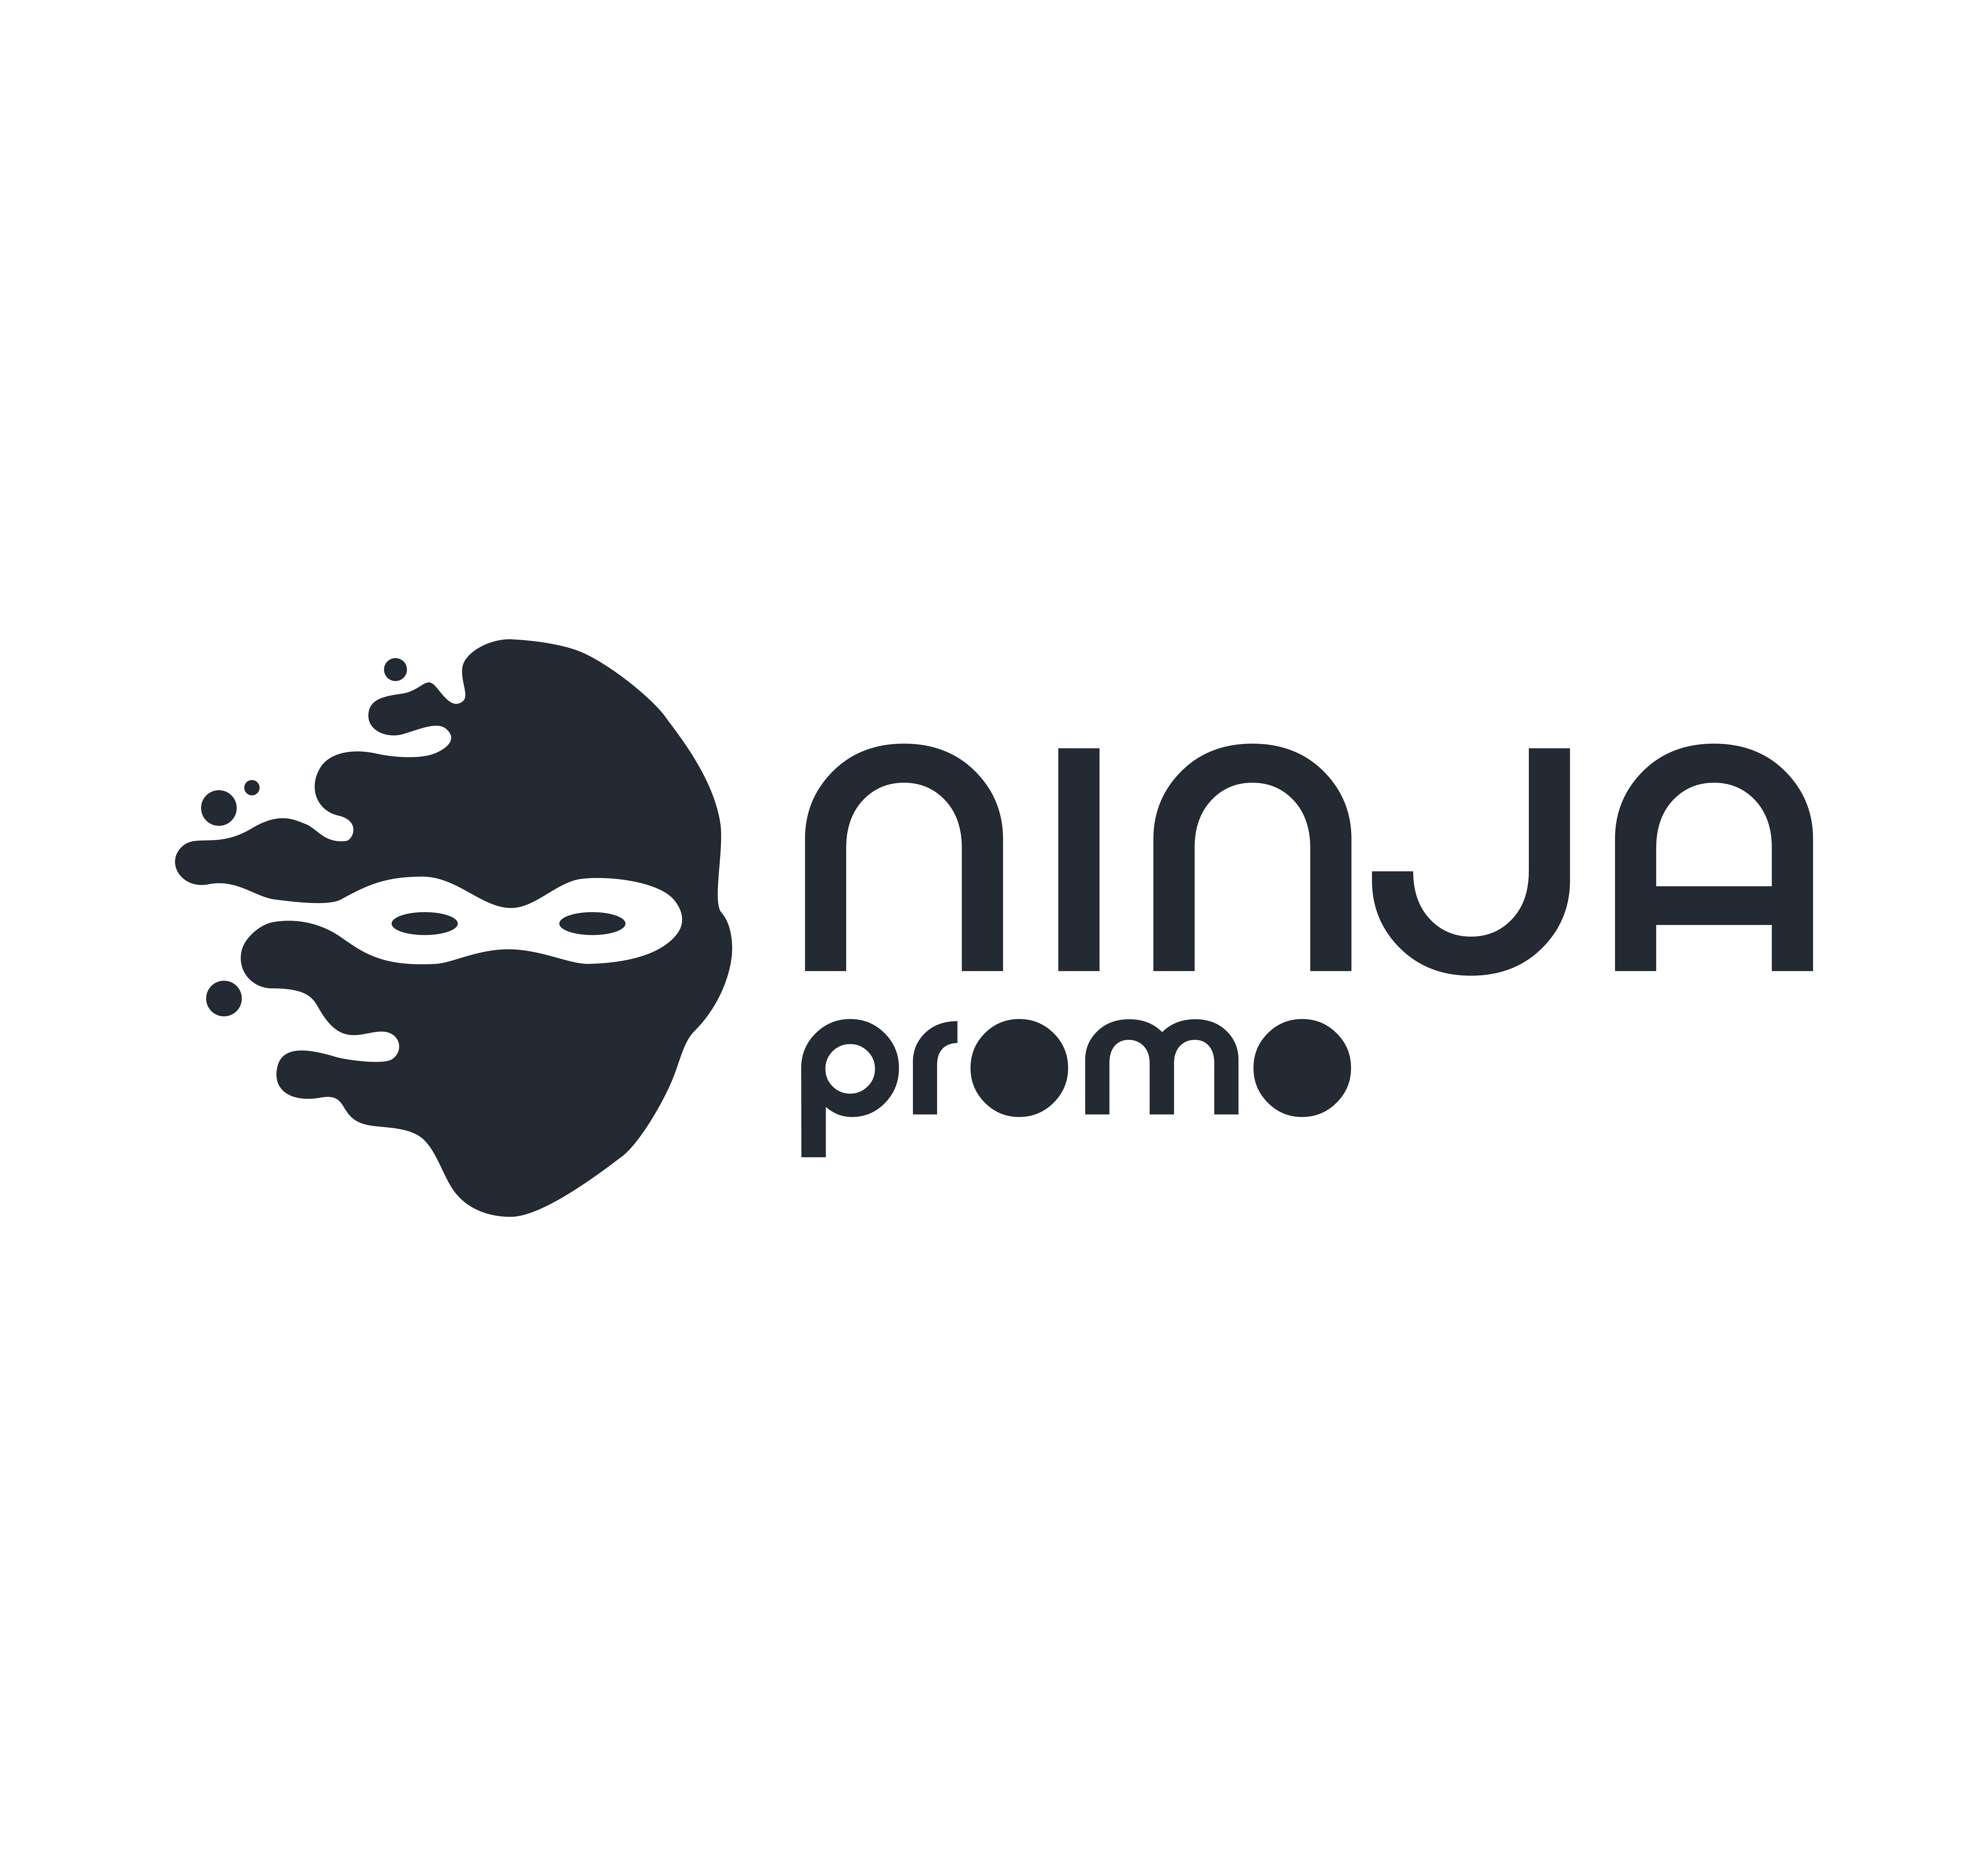 NinjaPromo. Digital Marketing Agency For Crypto, Startups, B2B, Software & Fintech